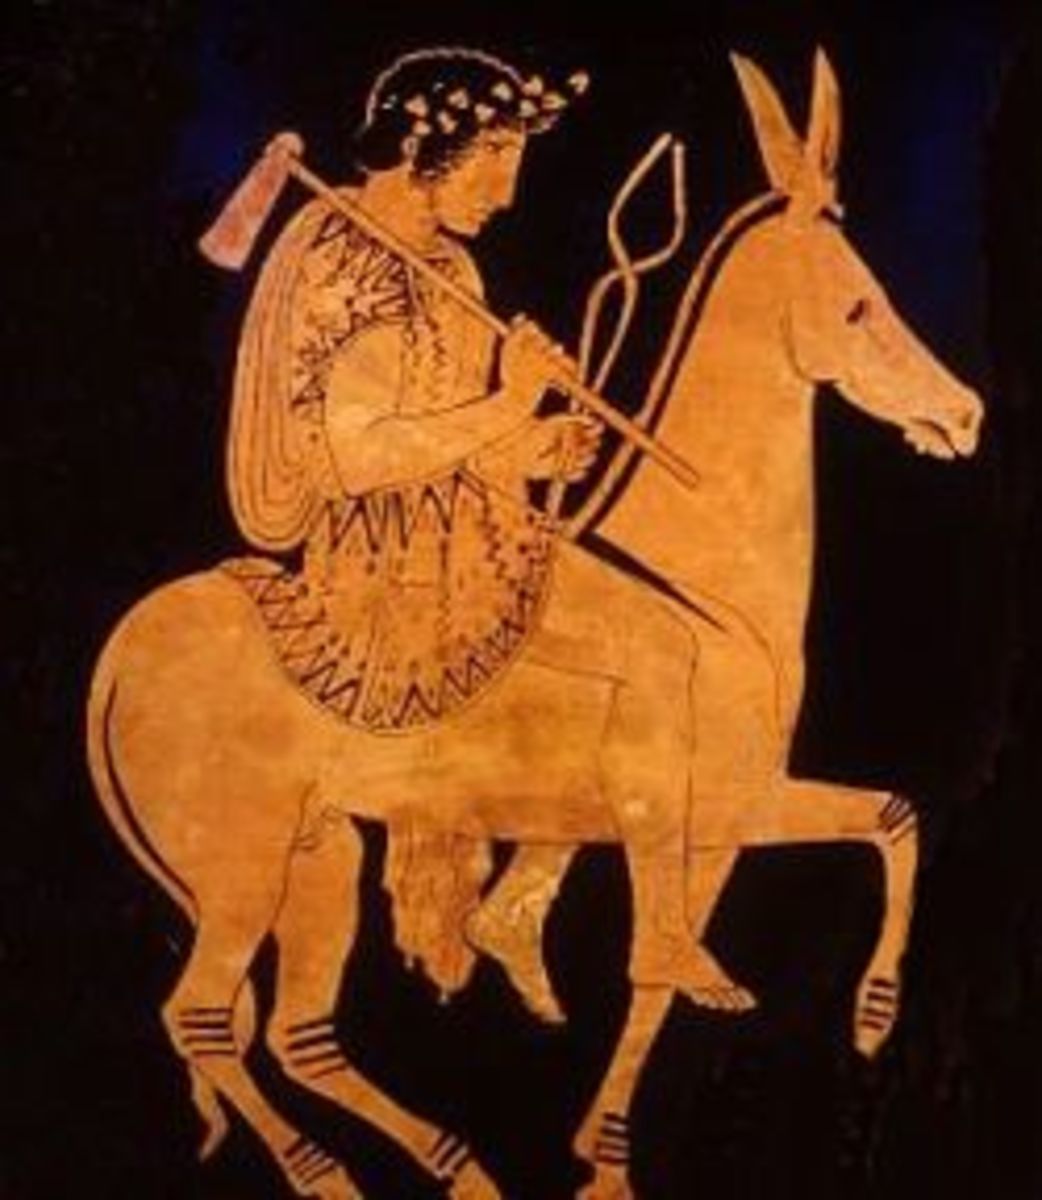 Hephaistos returns on a donkey